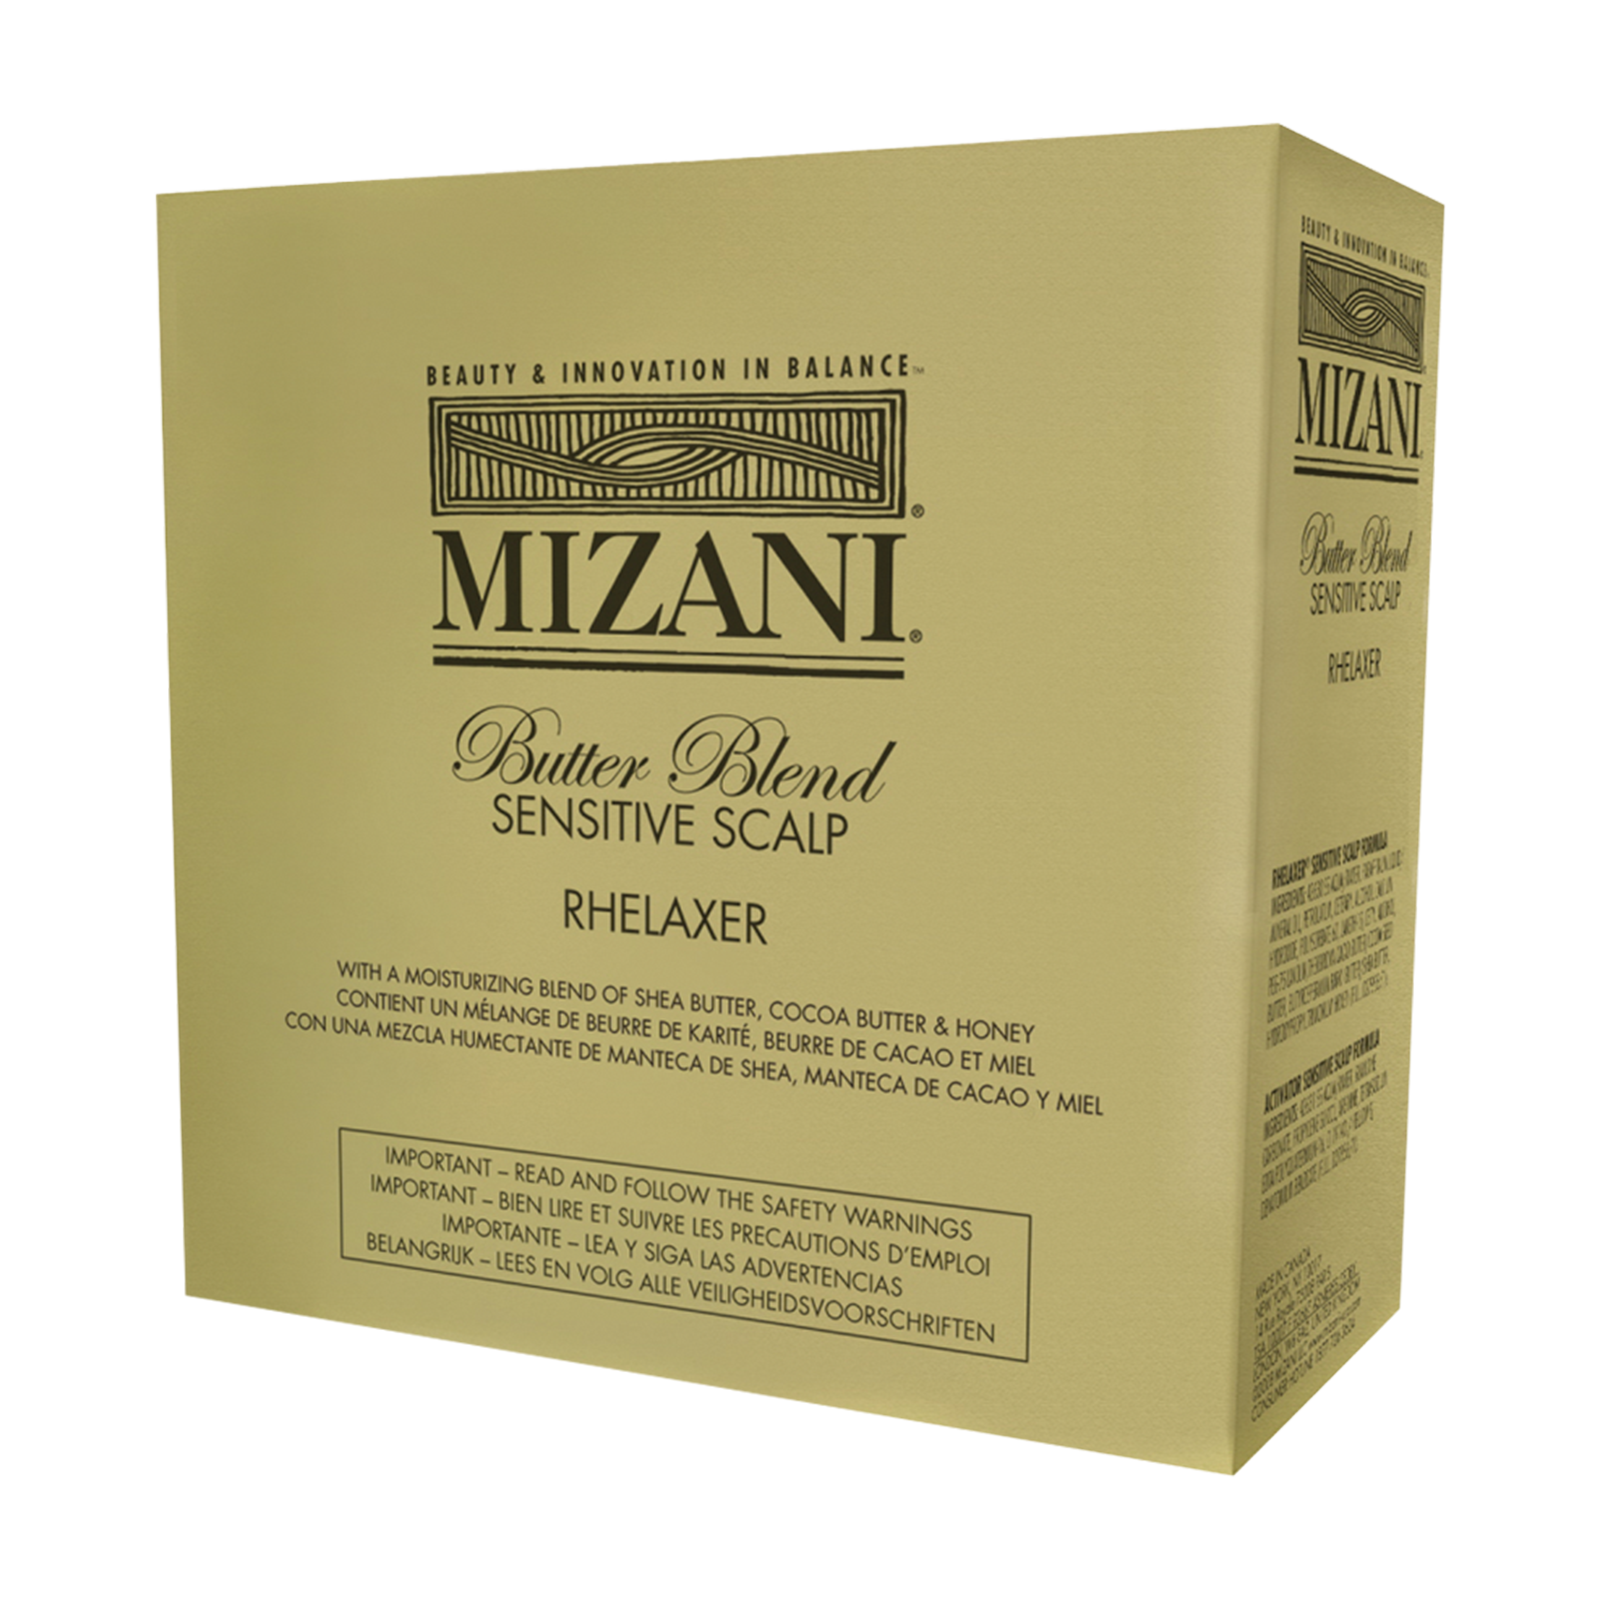 Mizani Classic Rhelaxer Sensitive Scalp Kit